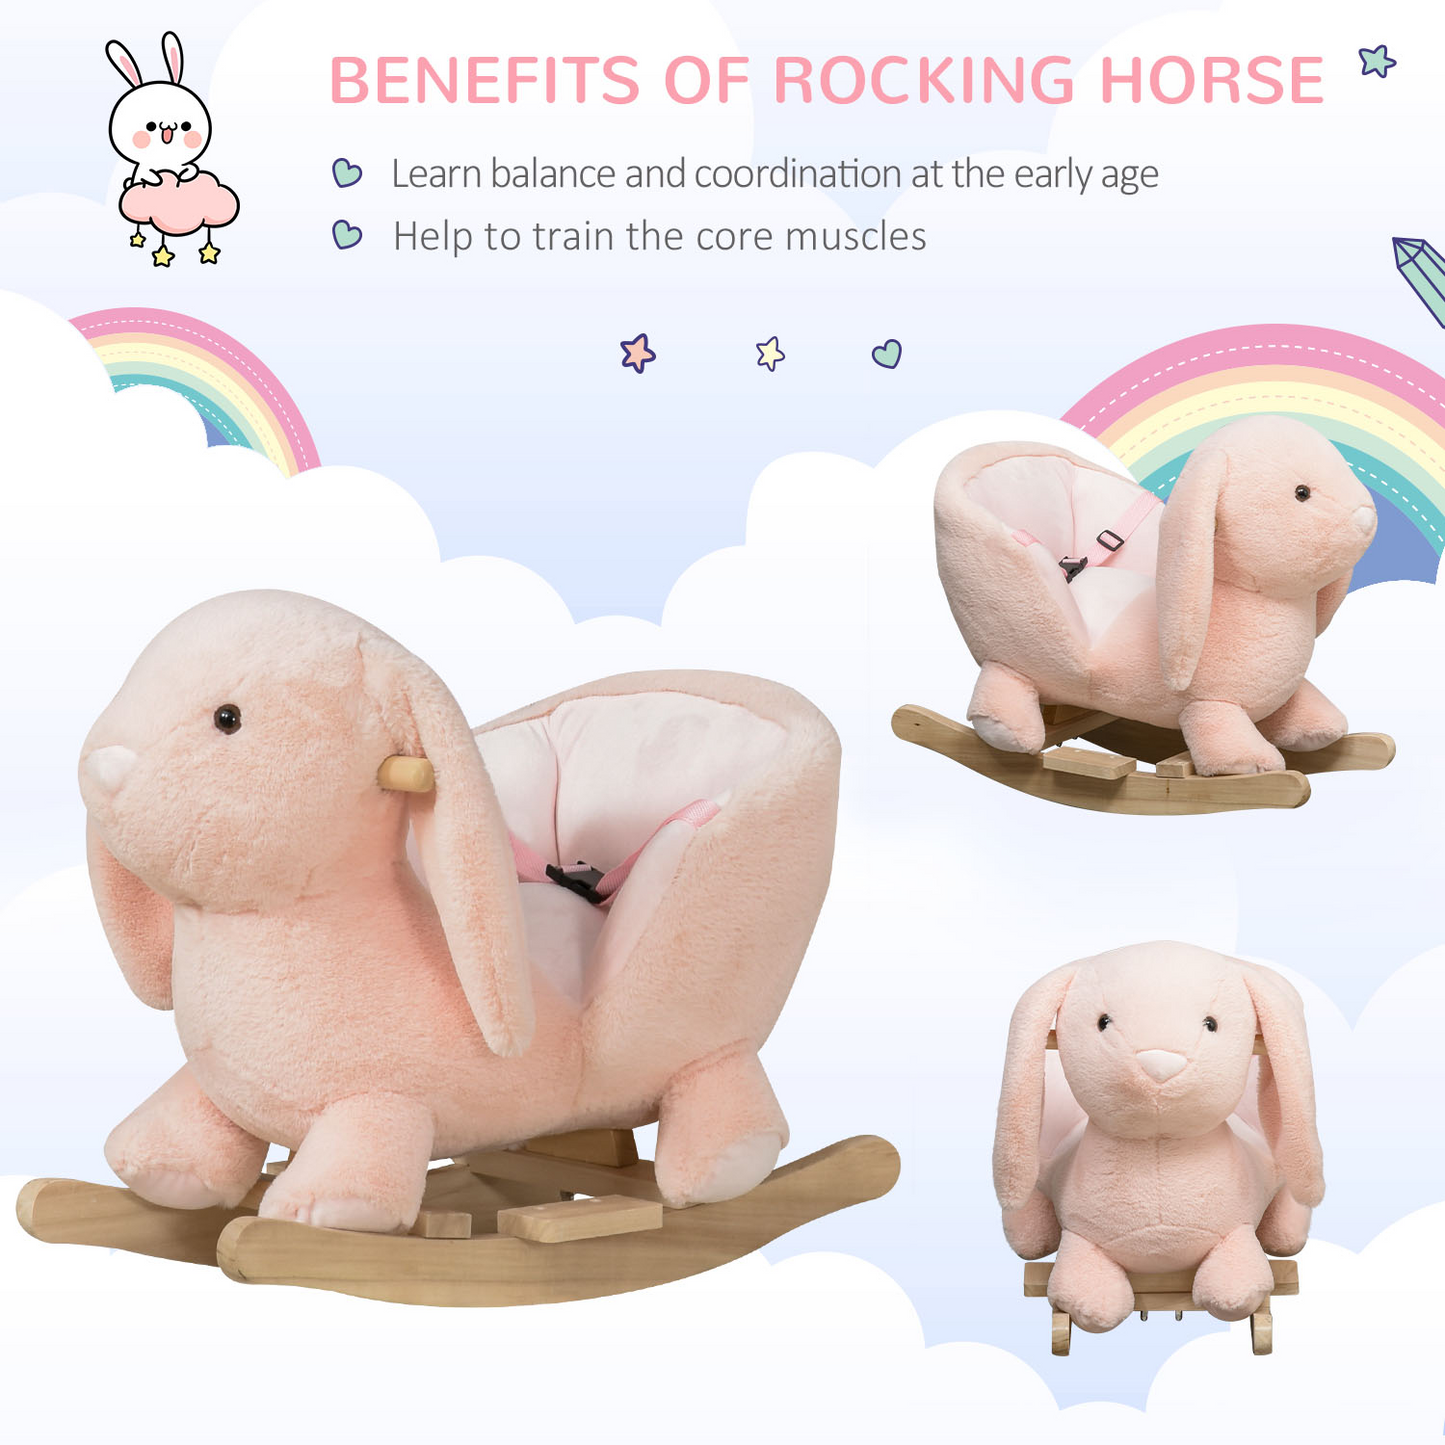 HOMCOM Kids Children Rocking Horse Plush Ride On Rabbit Seat w/ Sound Wood Base Seat Safety Belt Toddler Baby Toy Rocker Pink 18 - 36 Months